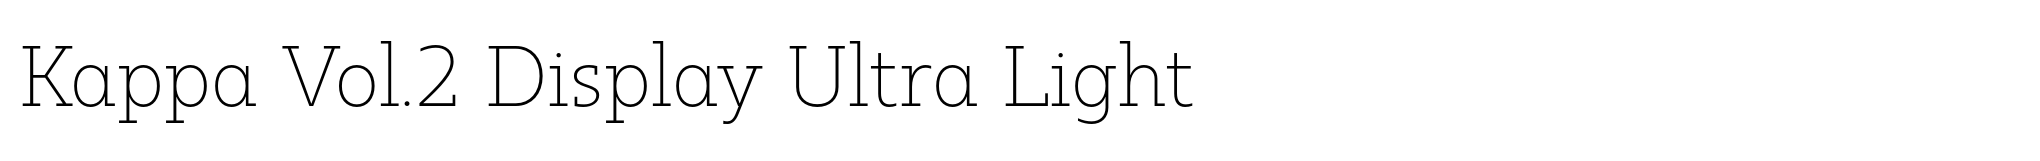 Kappa Vol.2 Display Ultra Light image